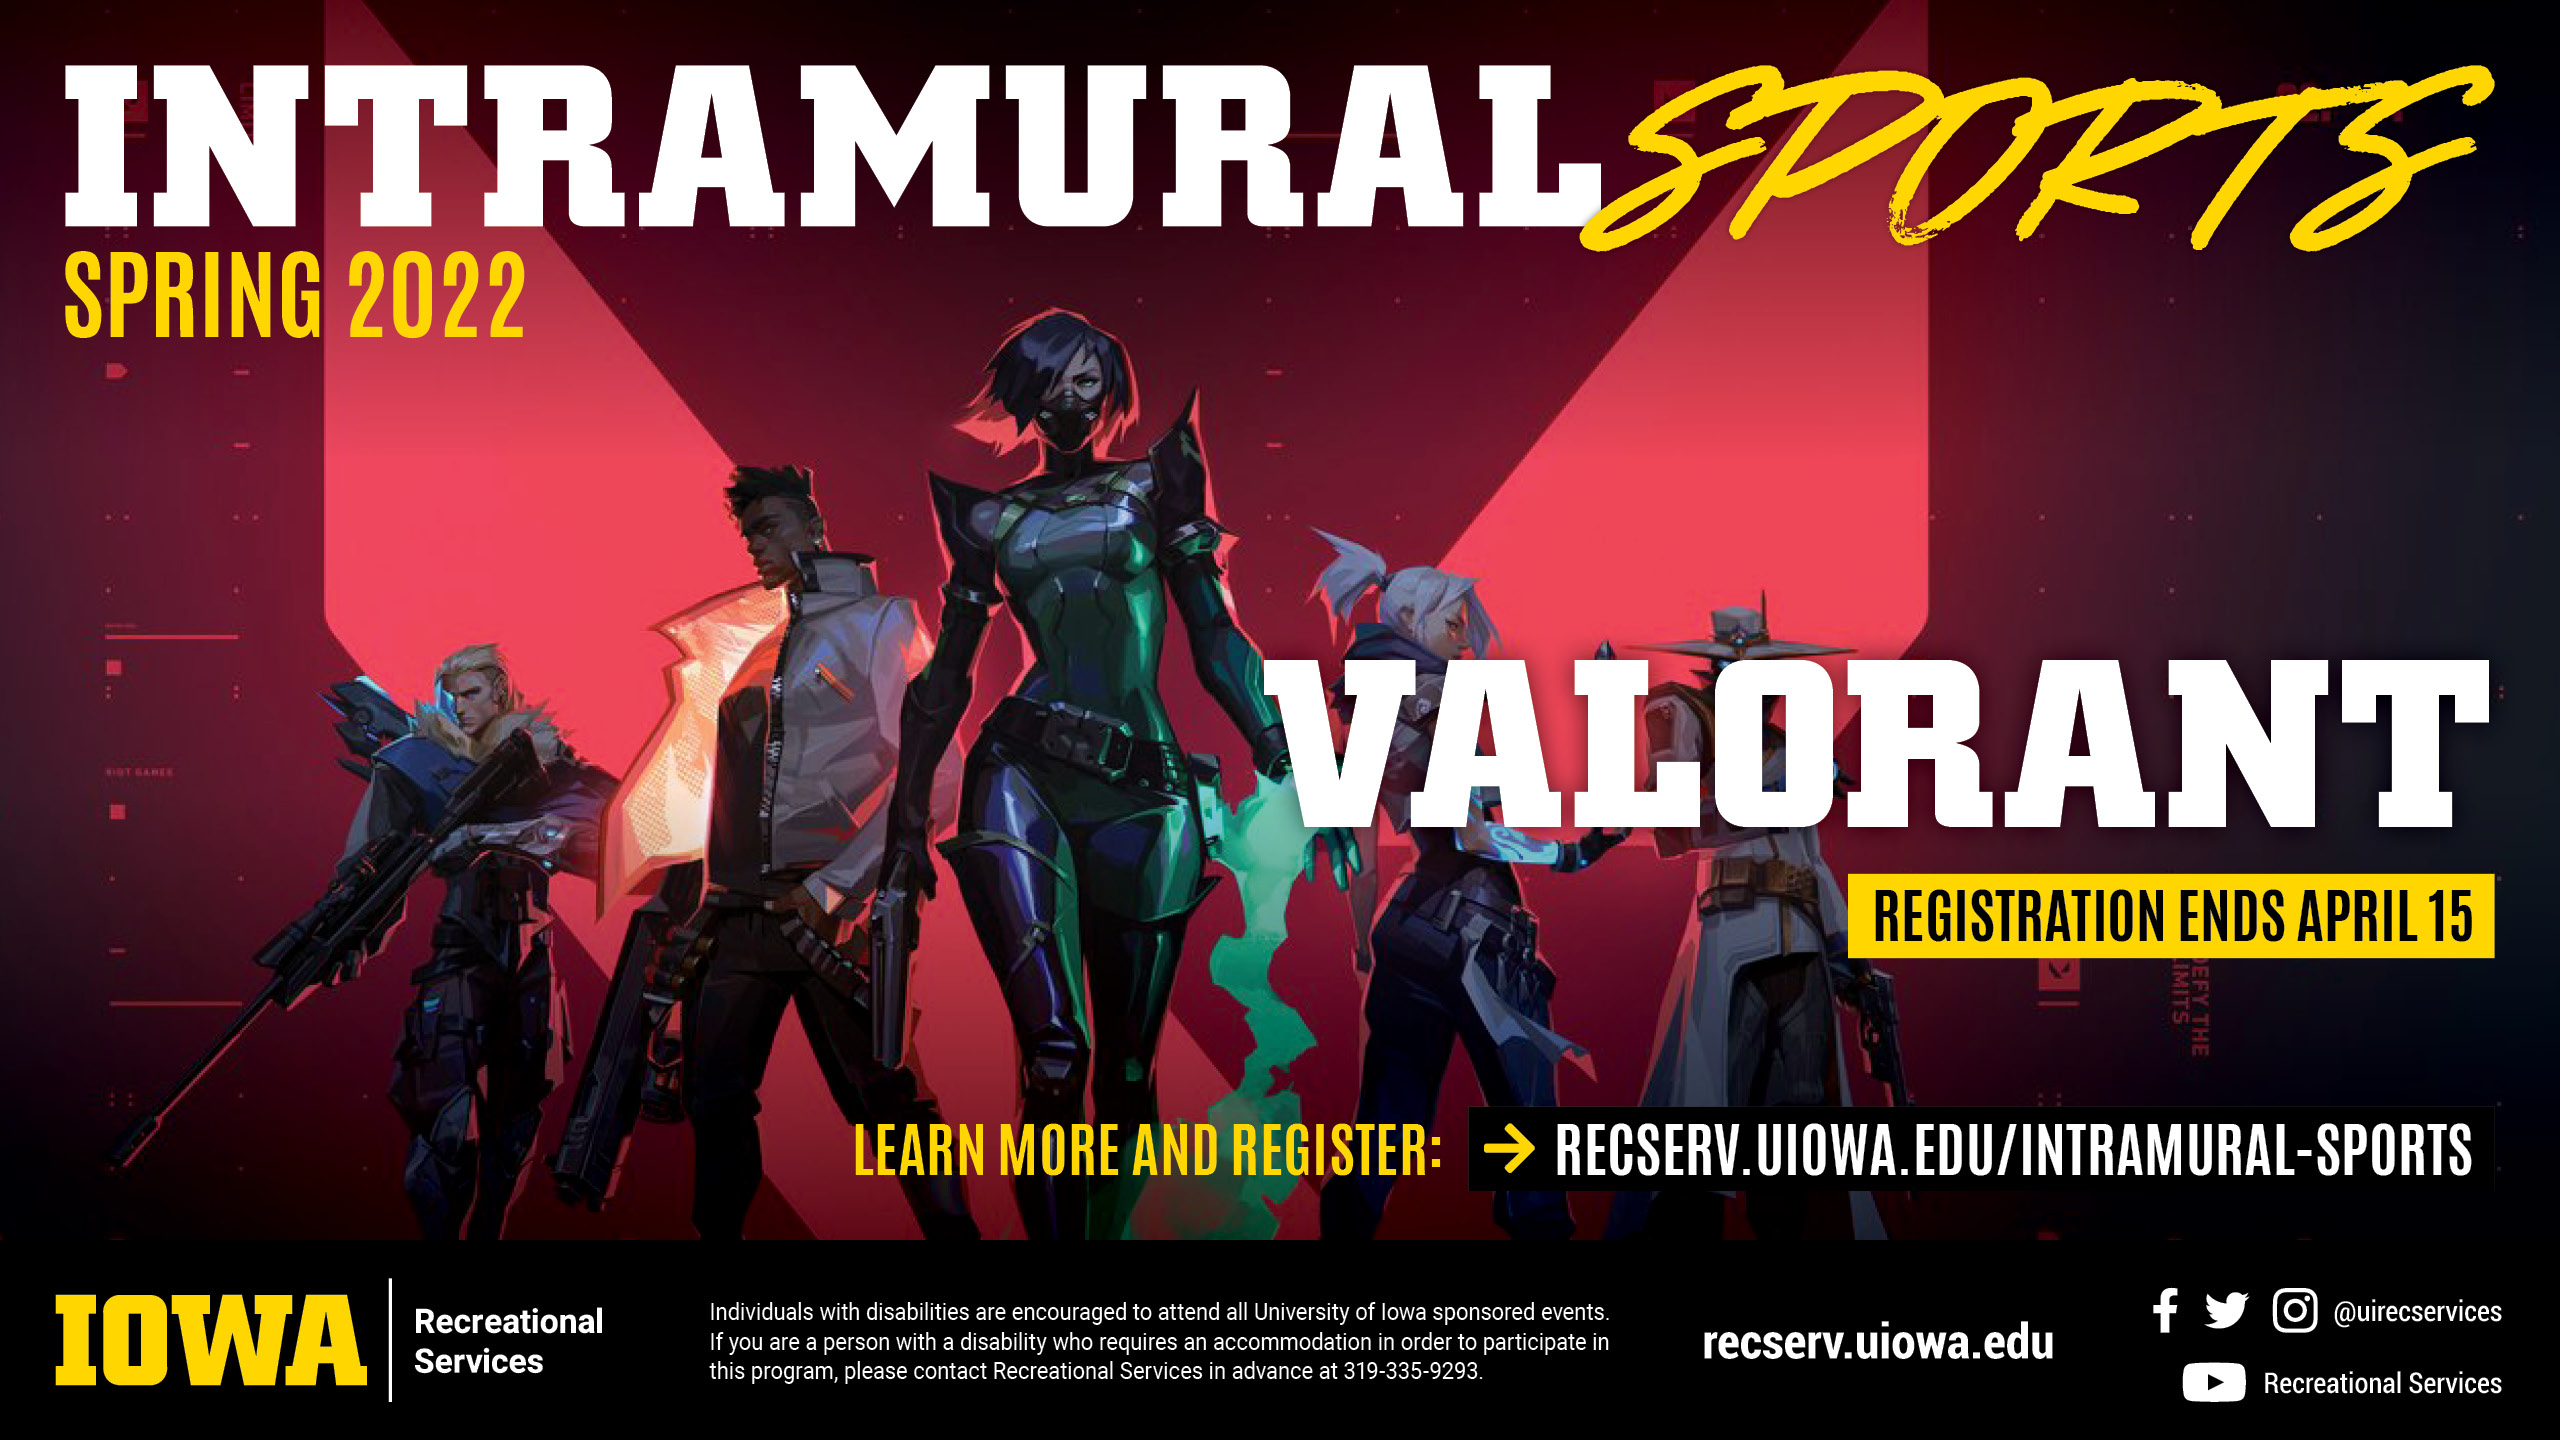 Intramural Sports Spring 2022 Valorant Registration ends April 15 learn more and register at: recserv.uiowa.edu/intramural-sports